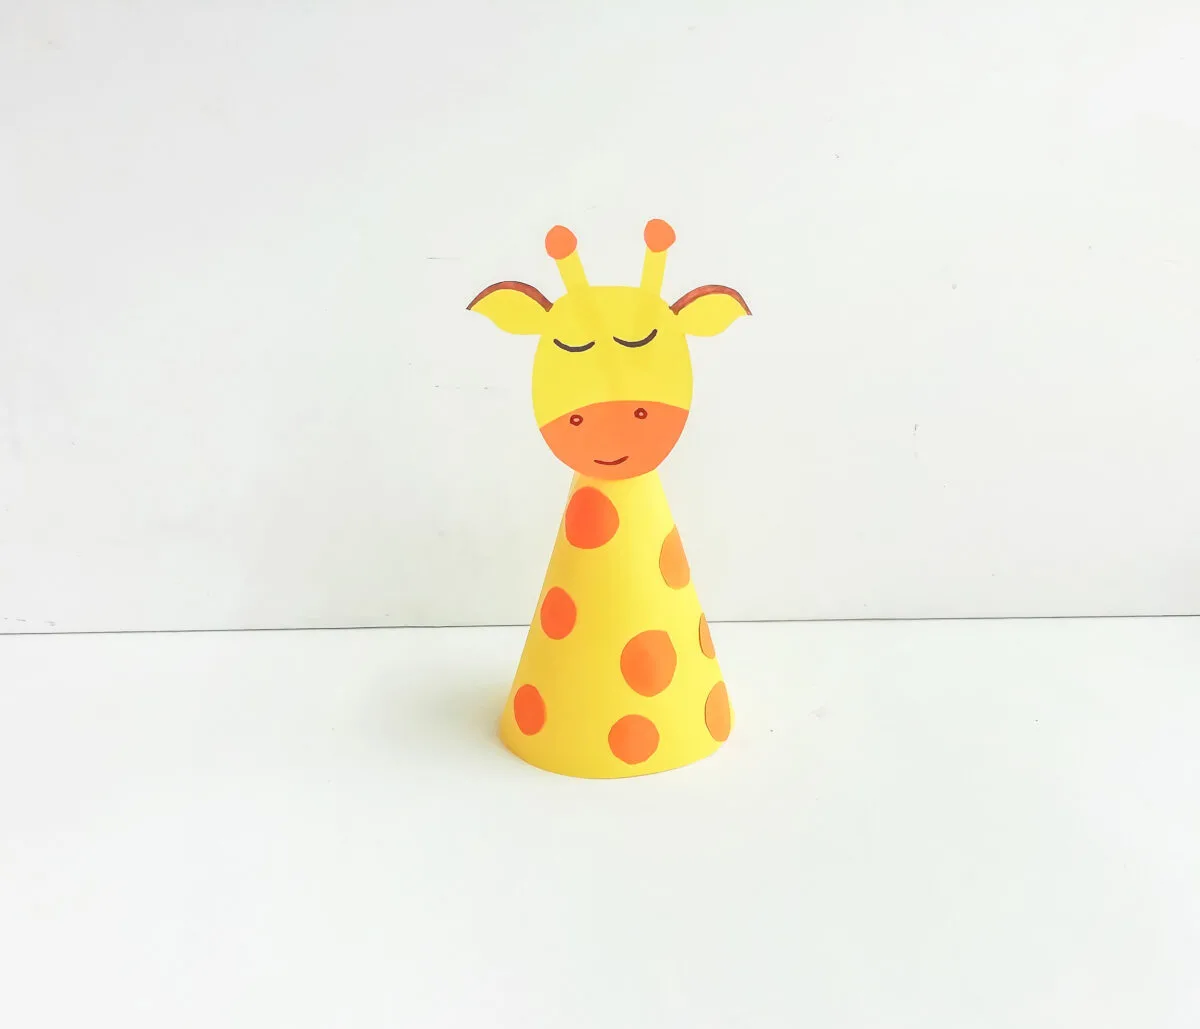 Giraffe head glued onto the cone.